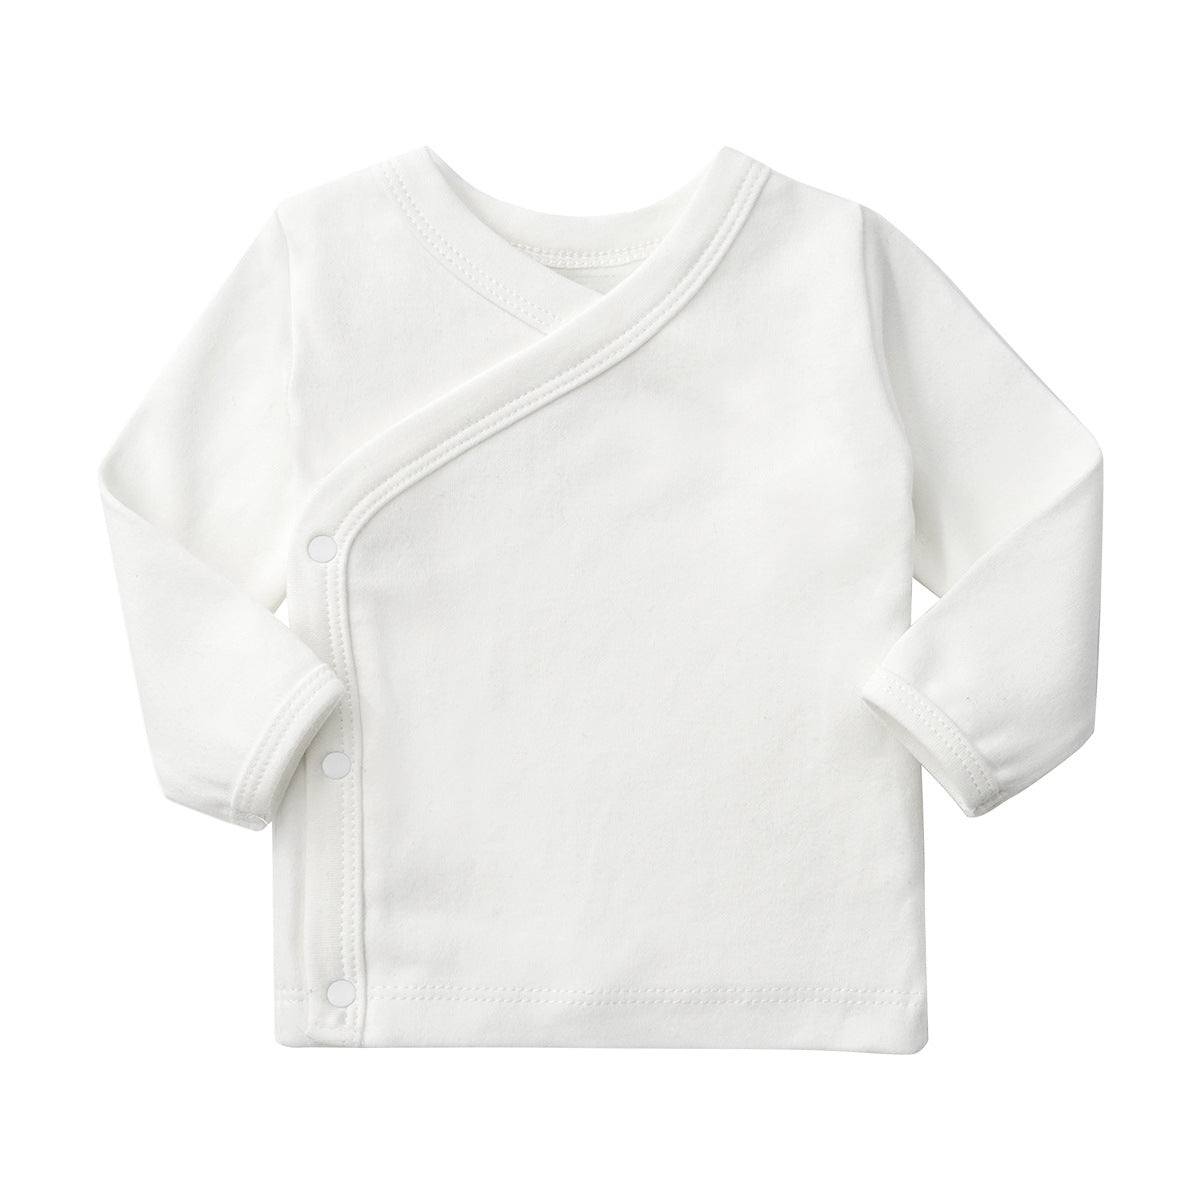 Newborn Baby Cotton Side Snap T-Shirt